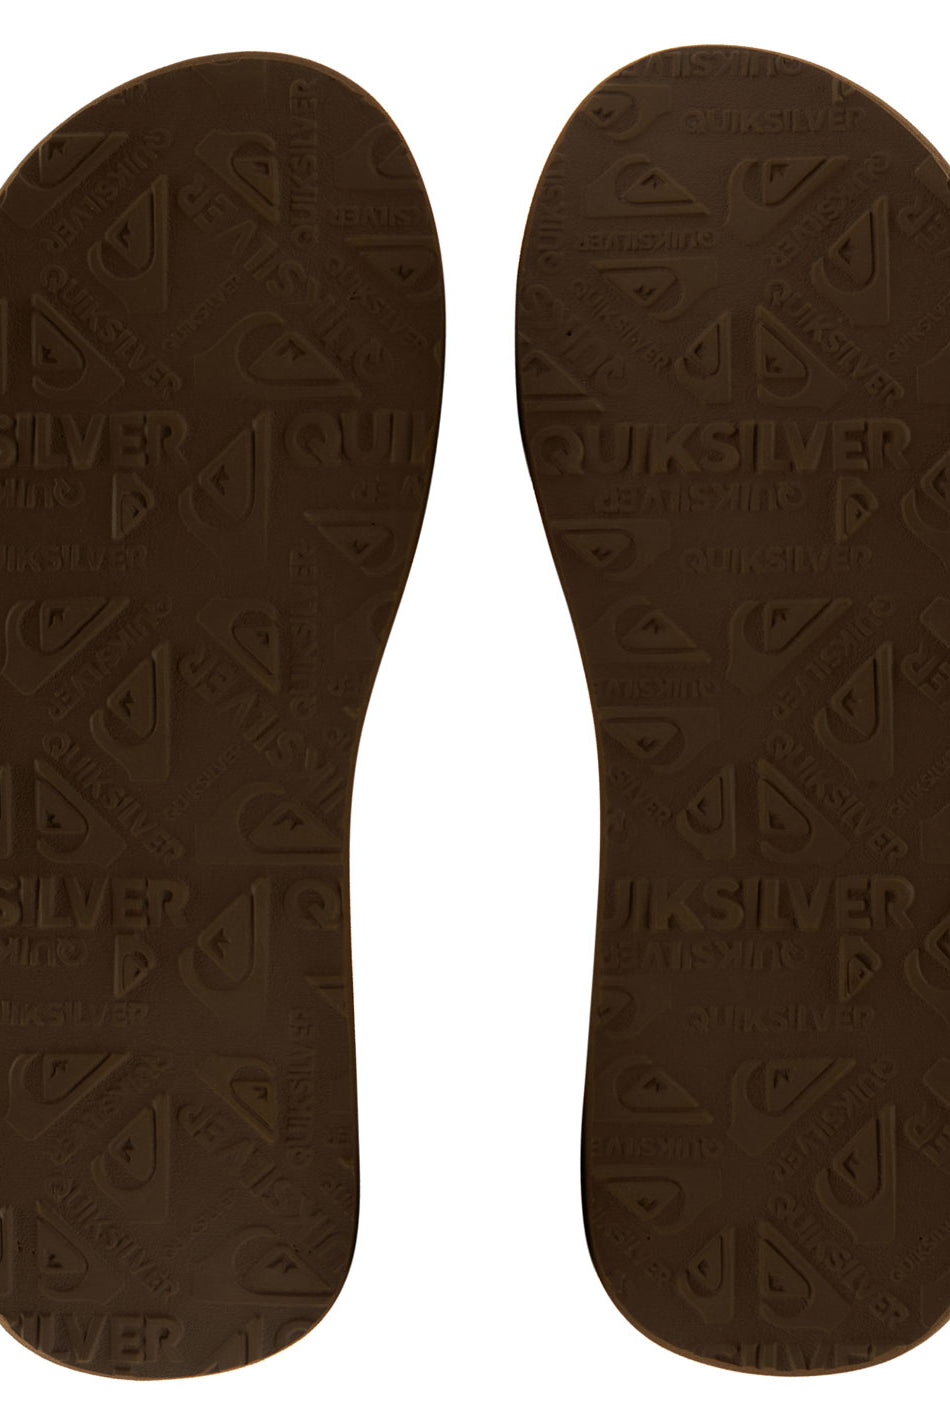 Quiksilver: Carve Suede Leather Sandals